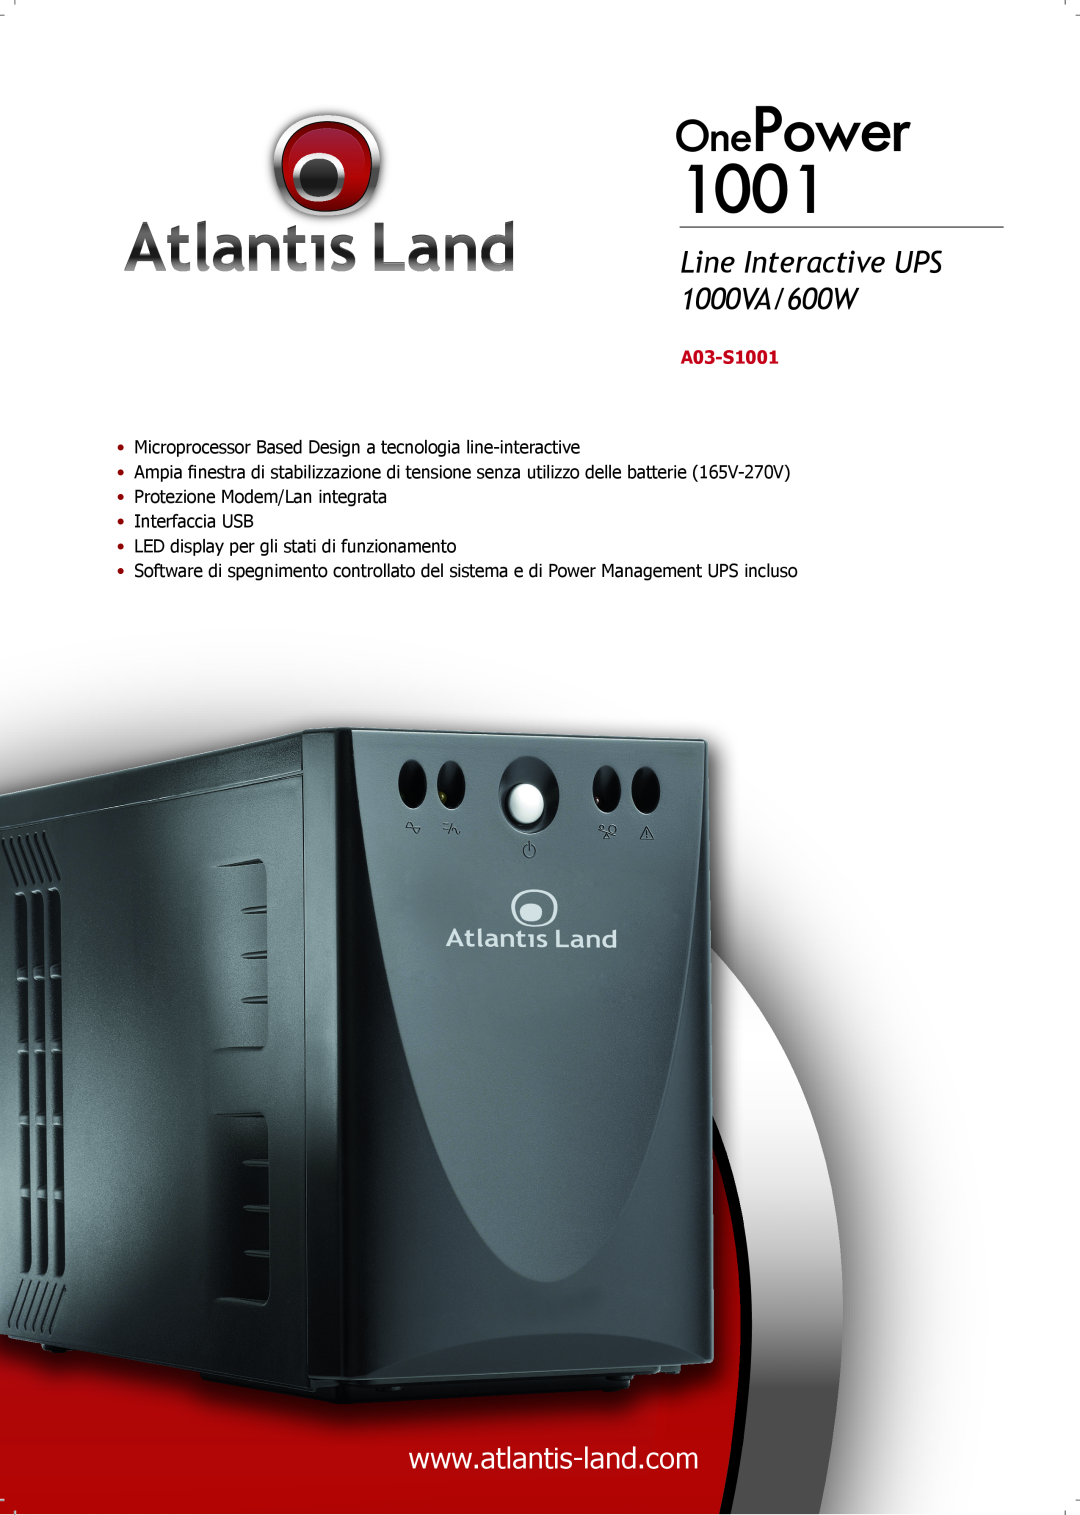 Atlantis Land manual OnePower, Line Interactive UPS 1000VA/600W, A03-S1001 